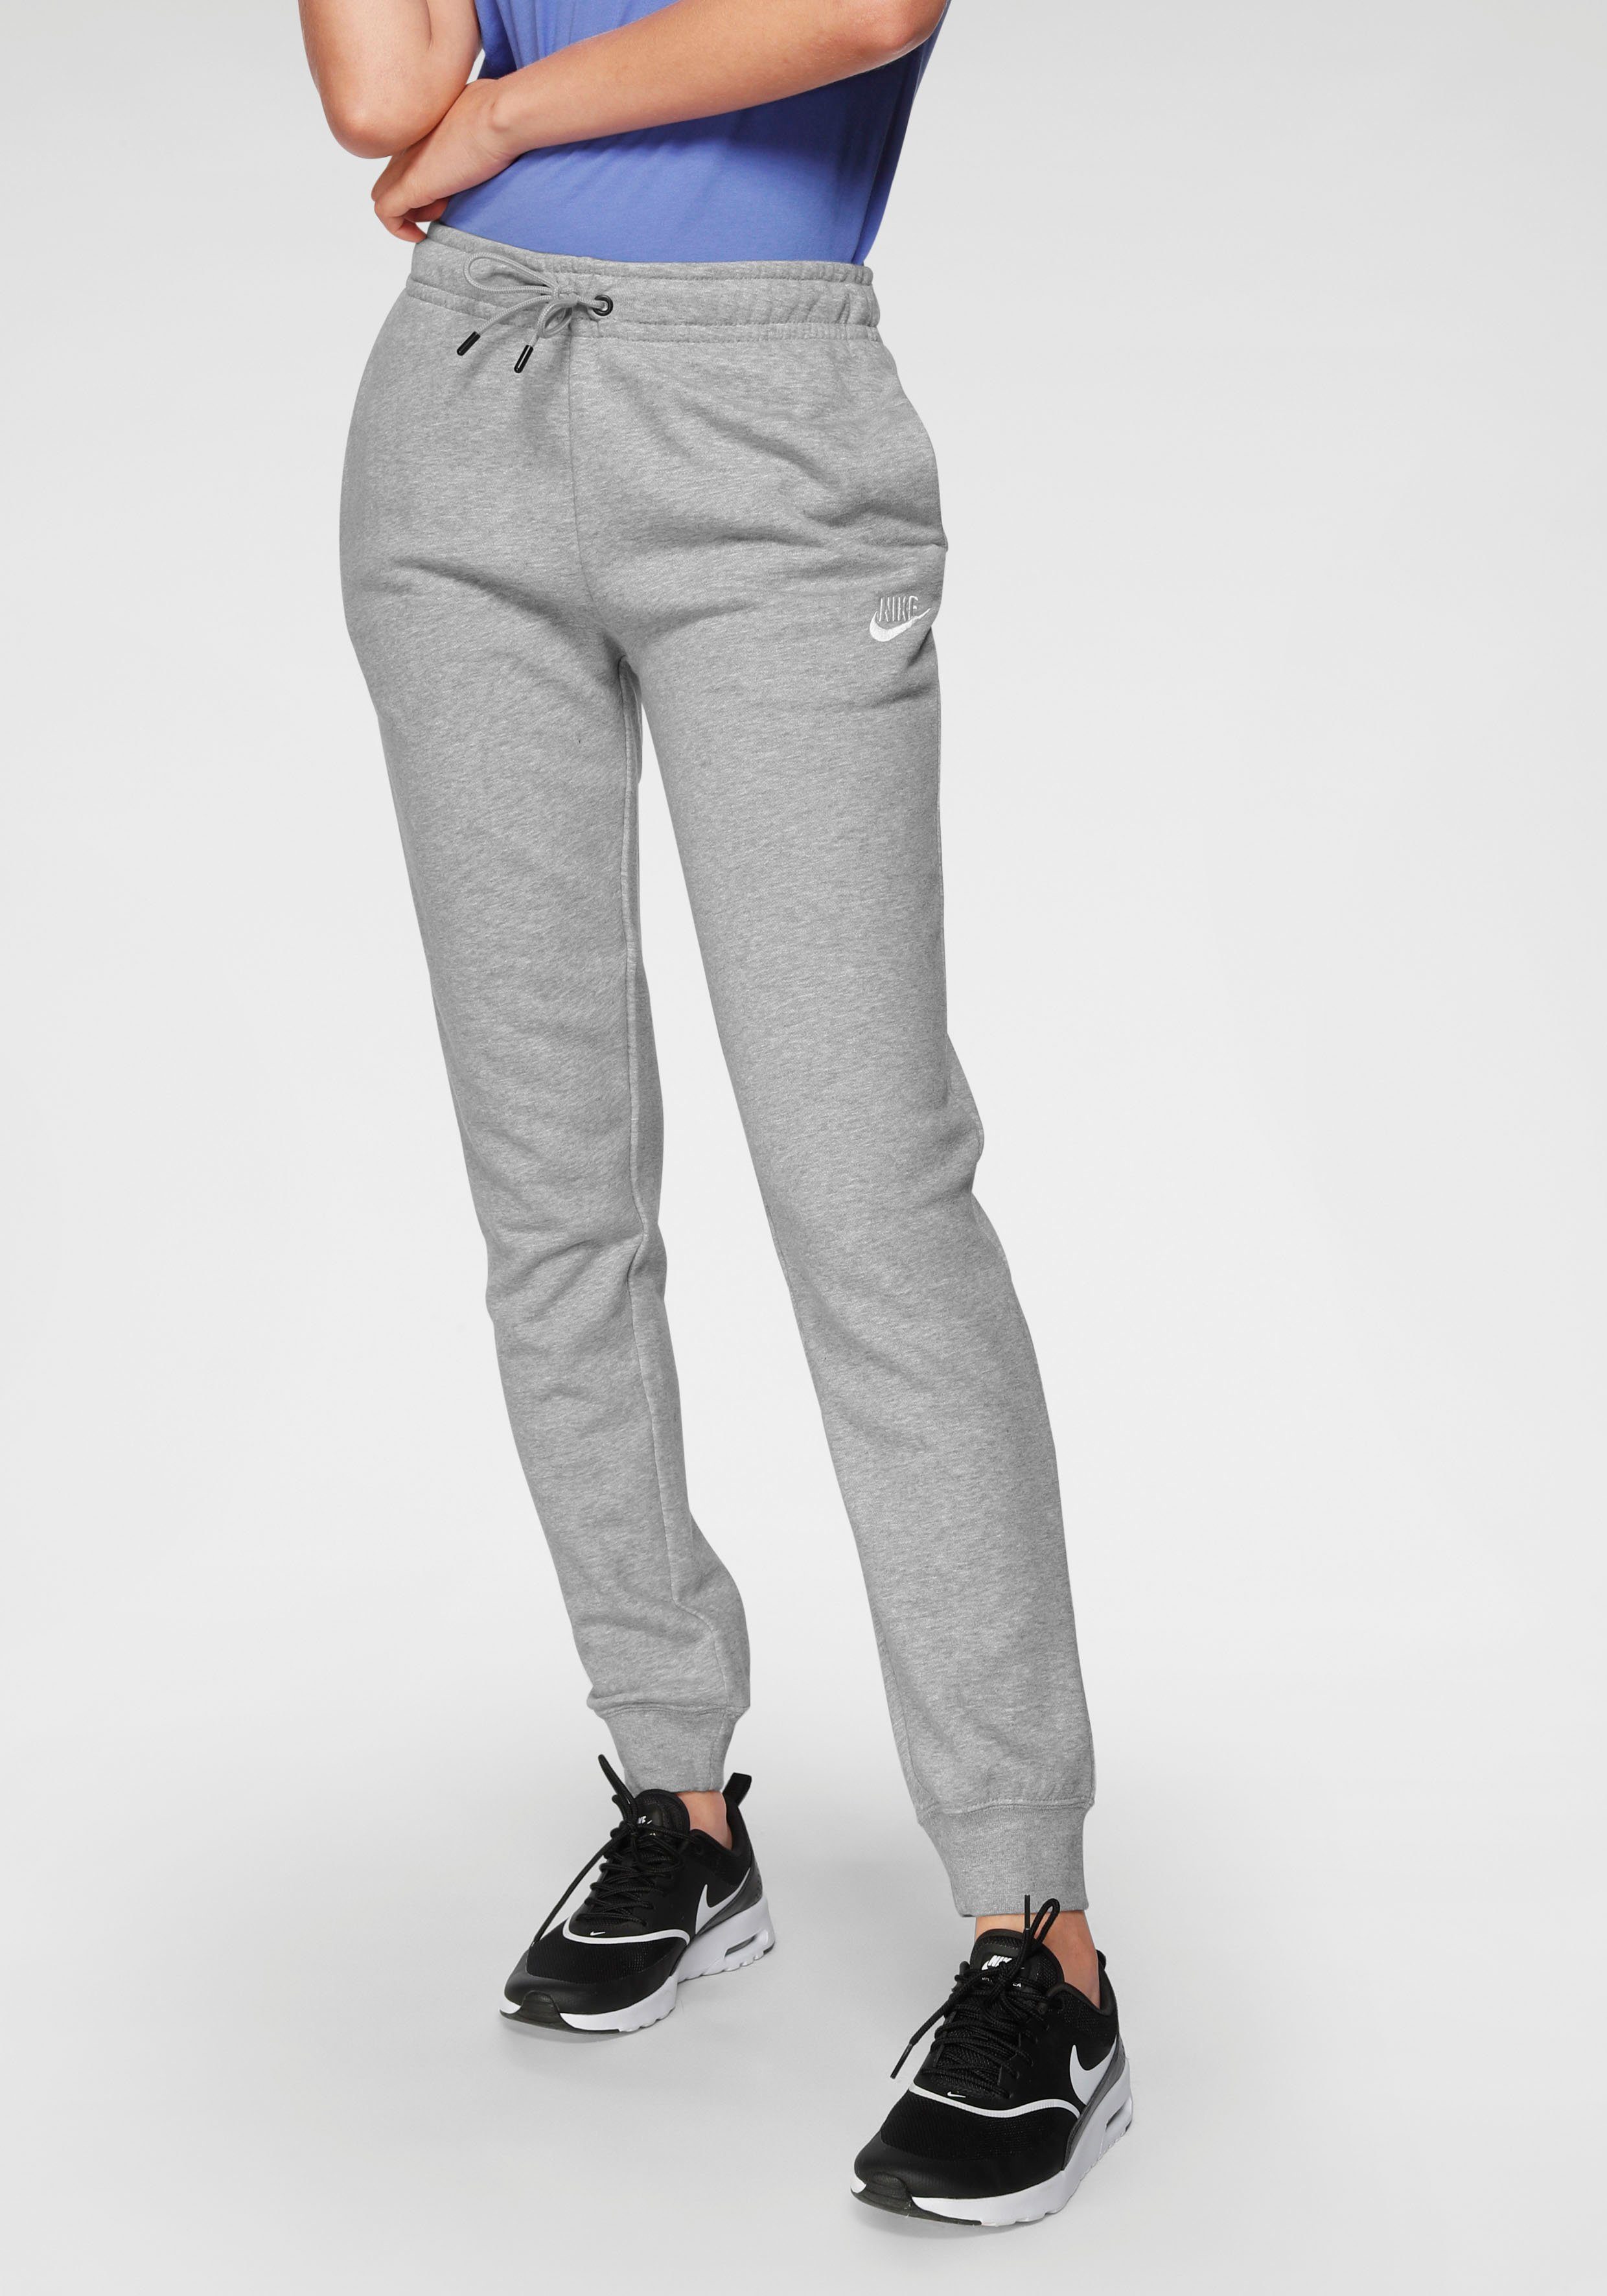 Rabattverkauf im Fachversandhandel ESSENTIAL grau-meliert Sportswear PANTS Jogginghose WOMENS Nike FLEECE